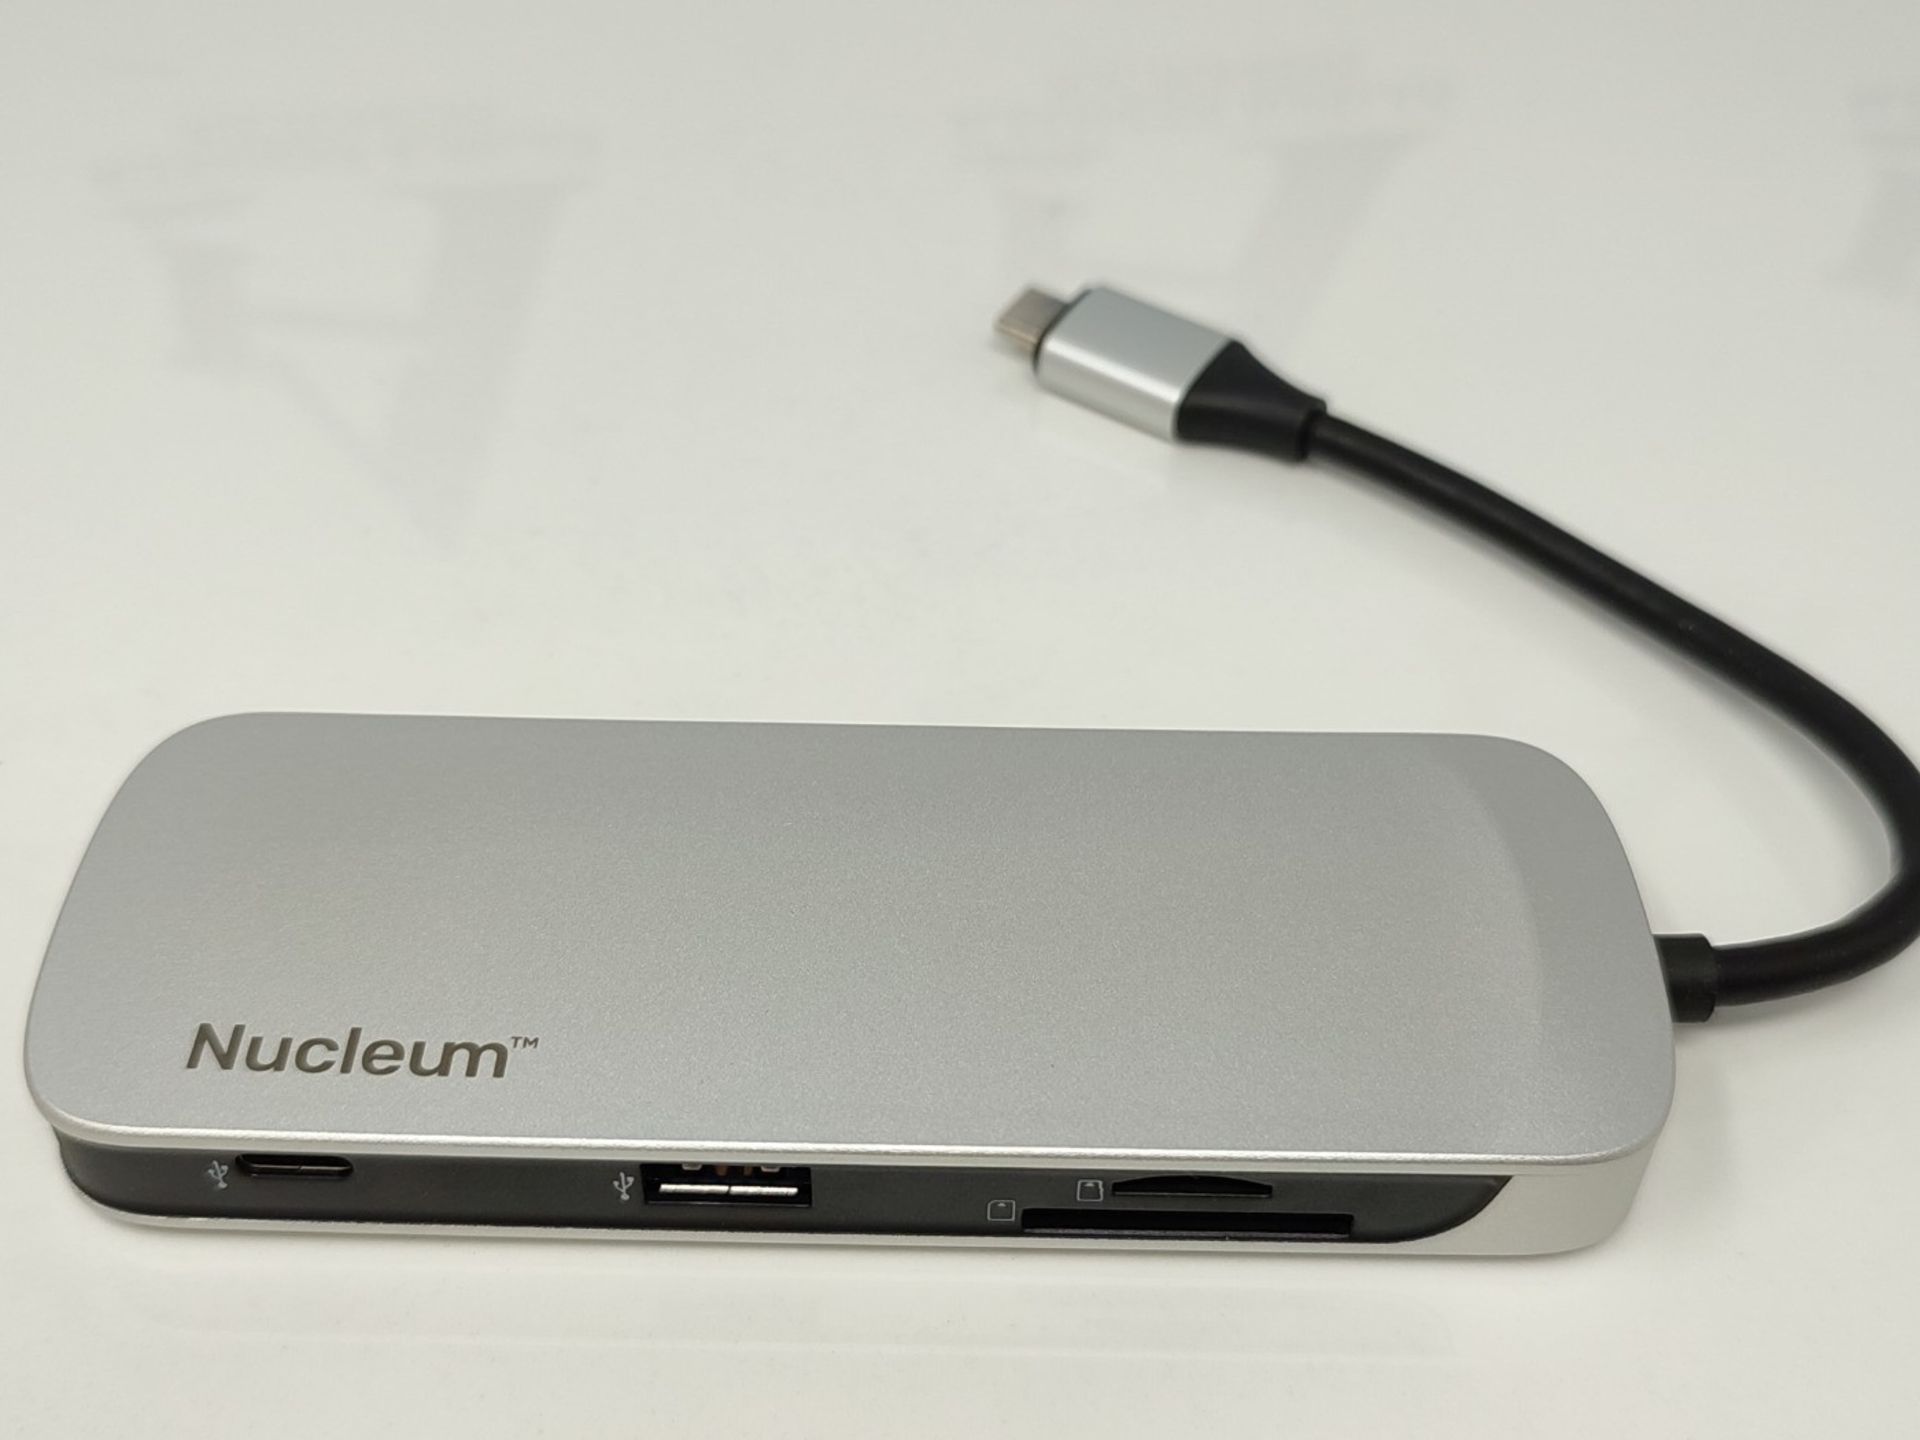 Kingston C-HUBC1-SR-EN - USB C Hub, Type C Adapter with USB 3.0, HDMI, SD/MicroSD, Pow - Image 3 of 3